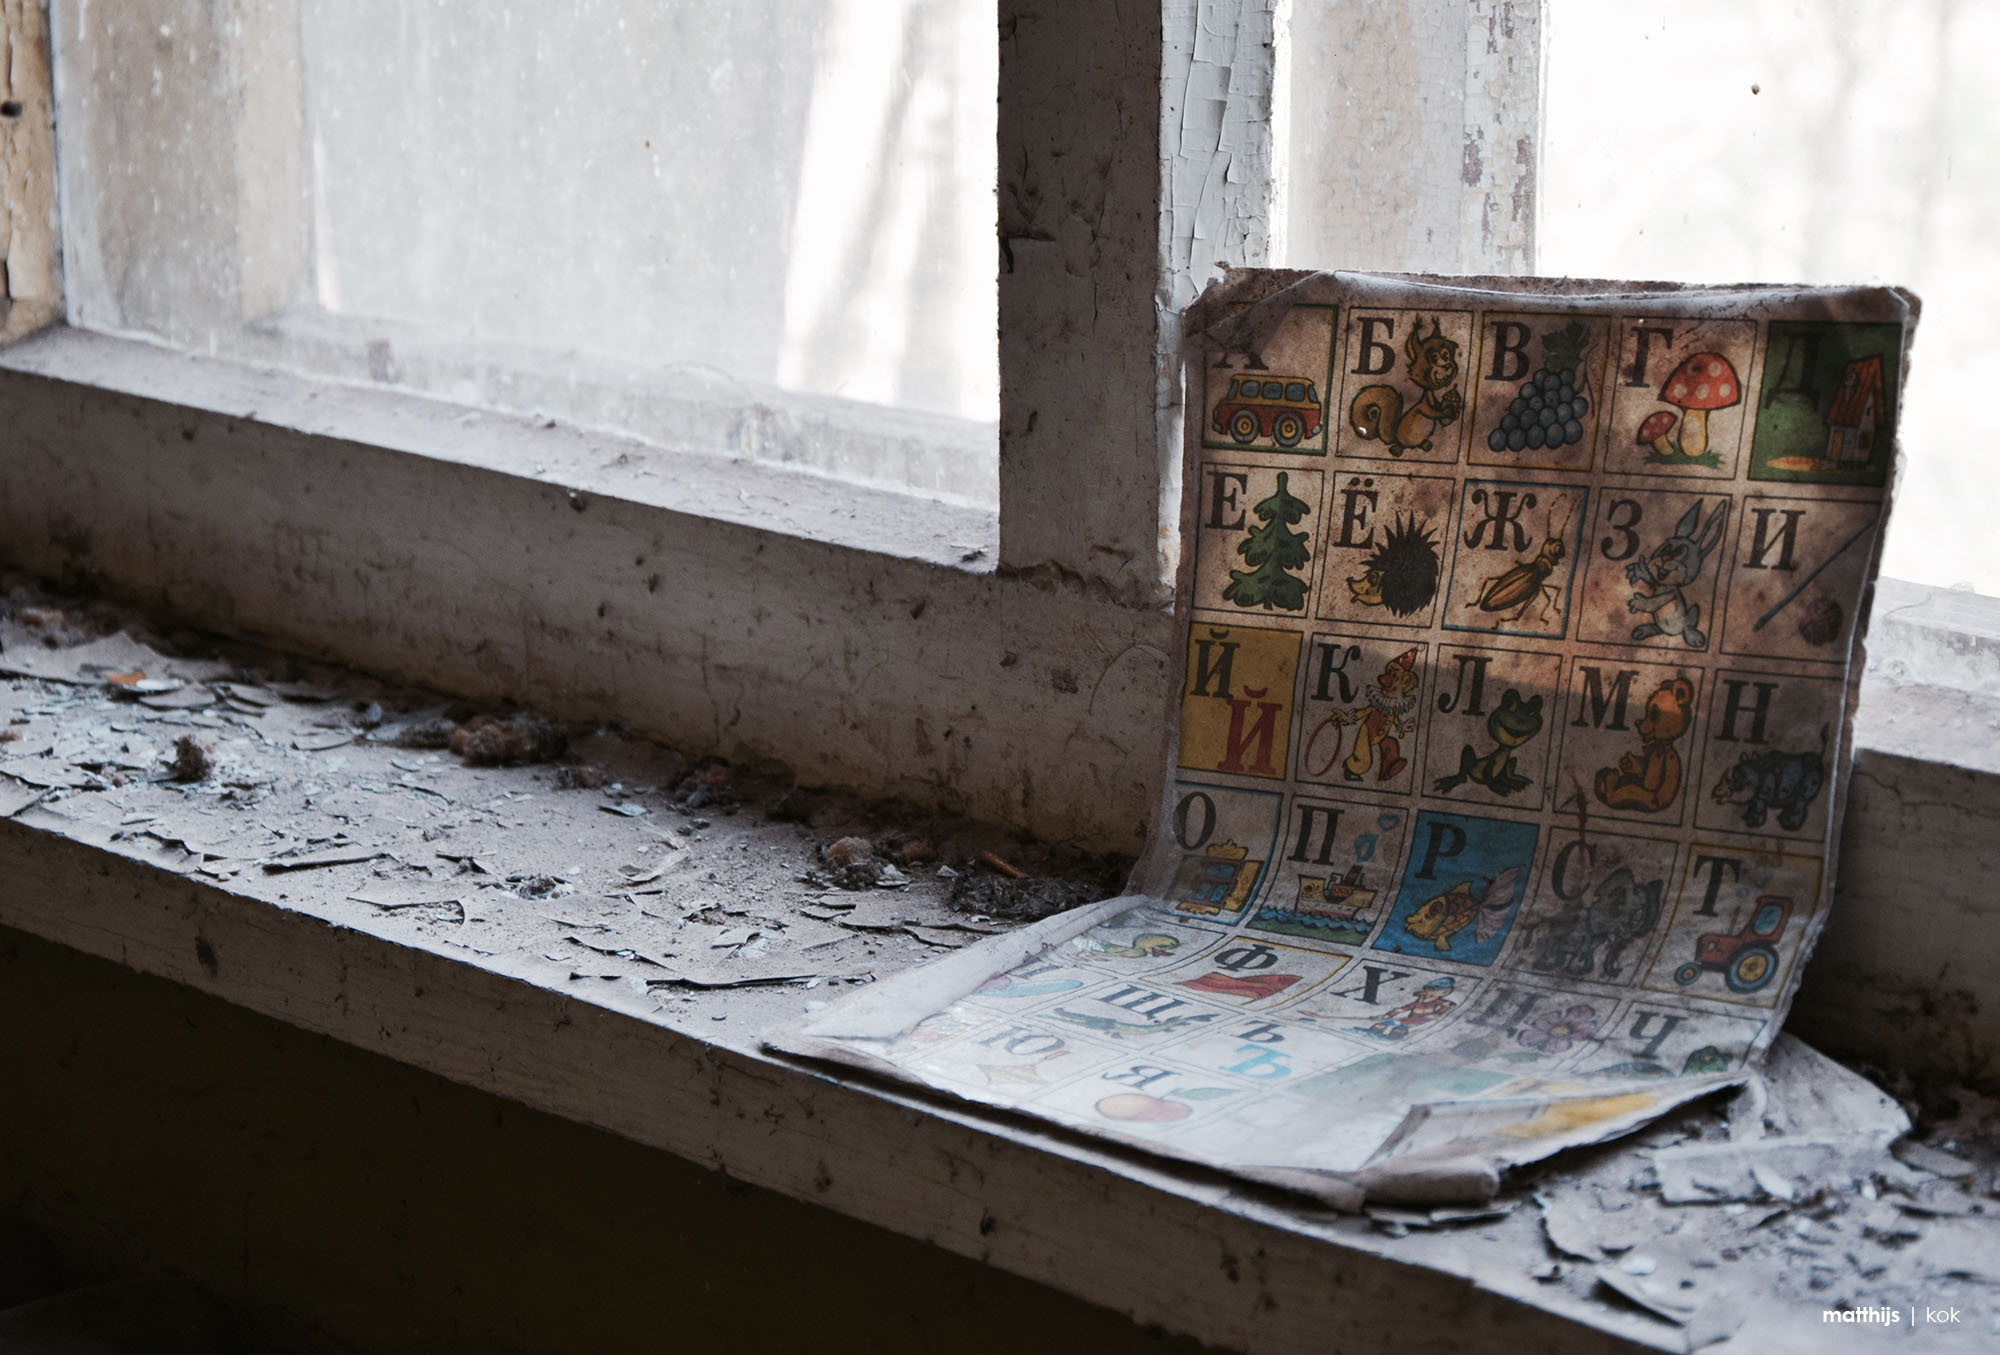 Collapsed School, Pripyat | Photo by Matthijs Kok